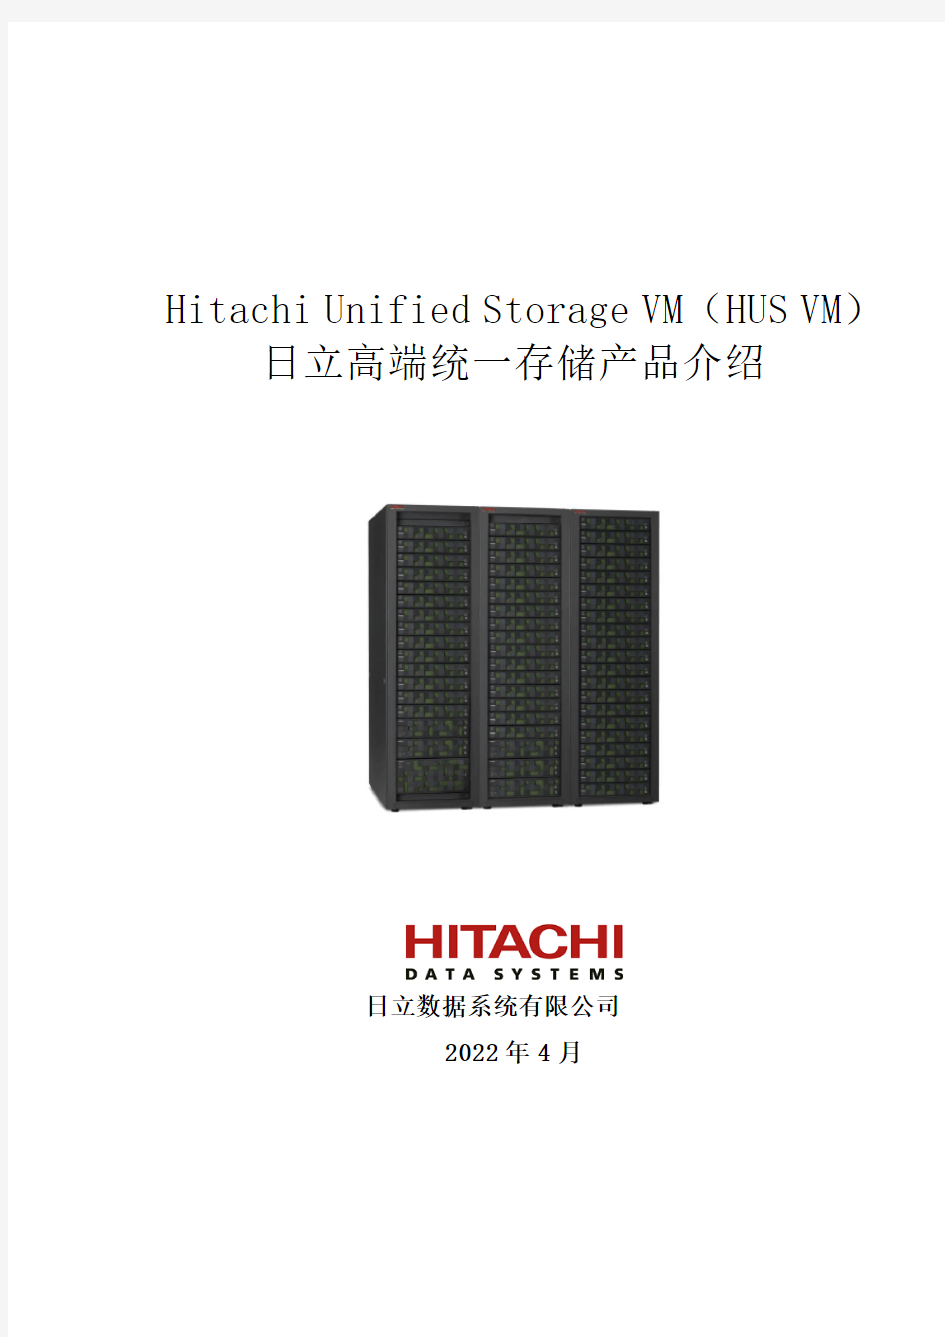 2-HUS VM磁盘阵列产品说明-v3.2